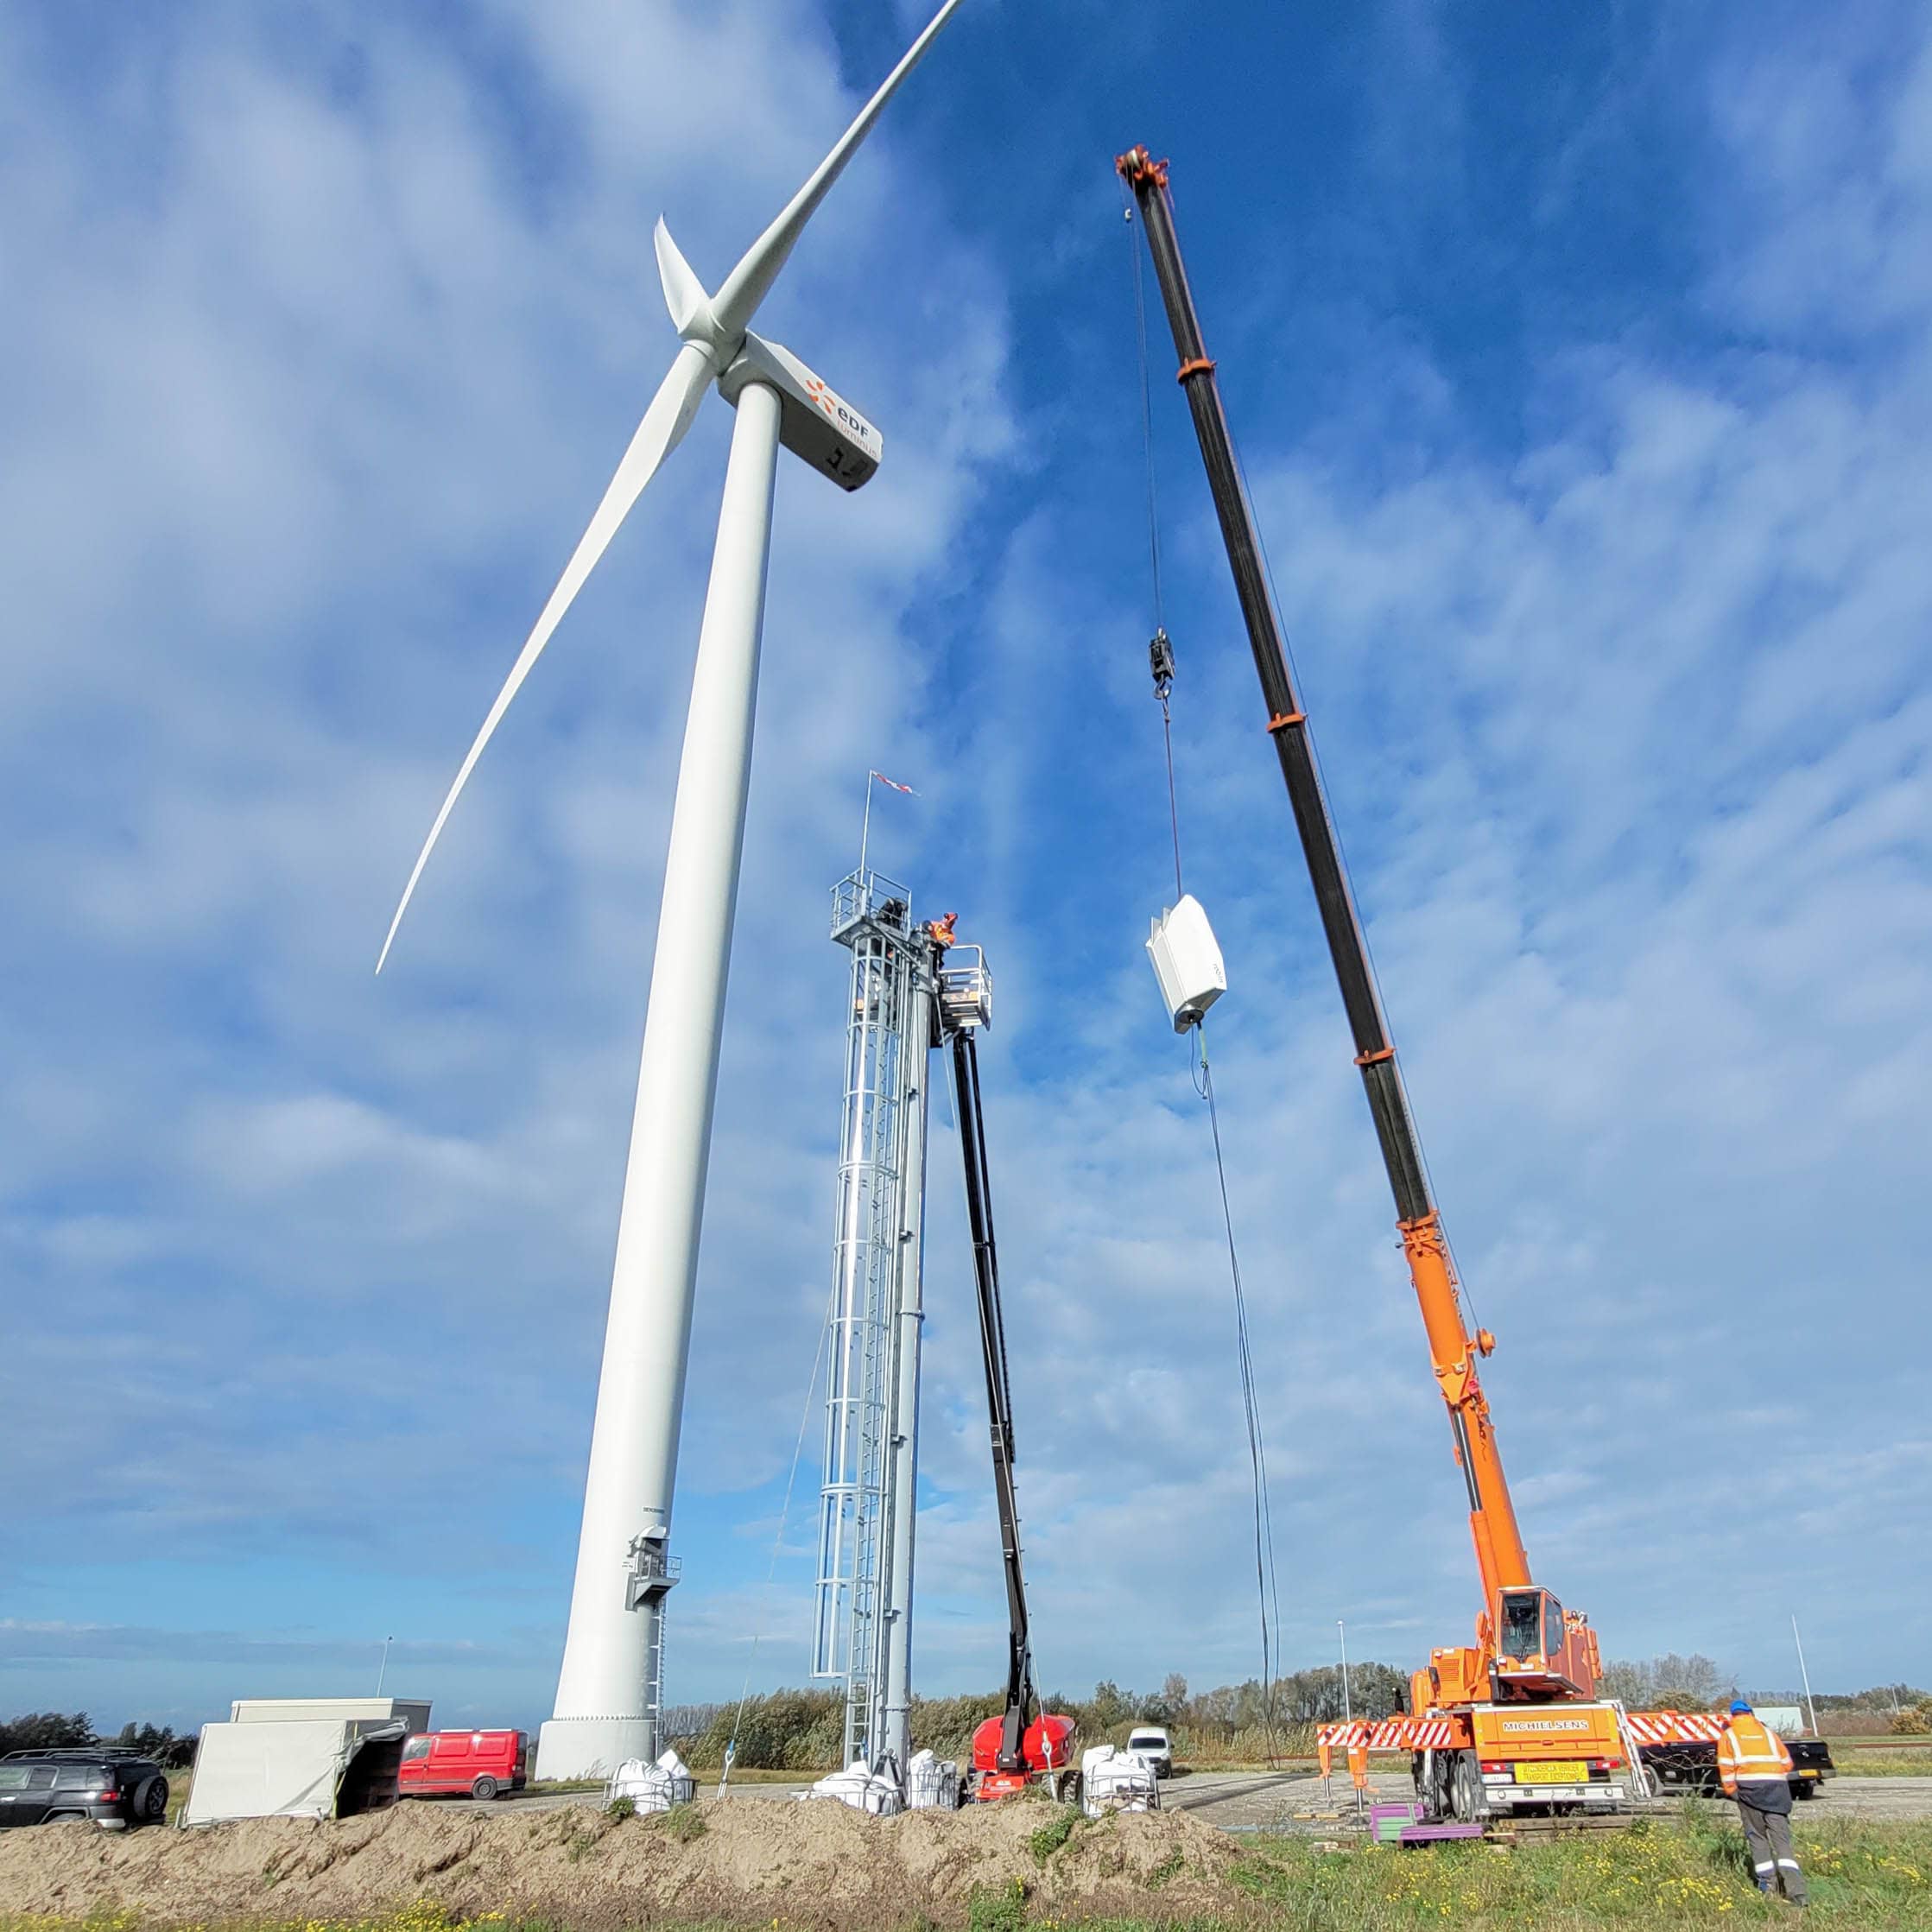 Dismanteling a windturbine